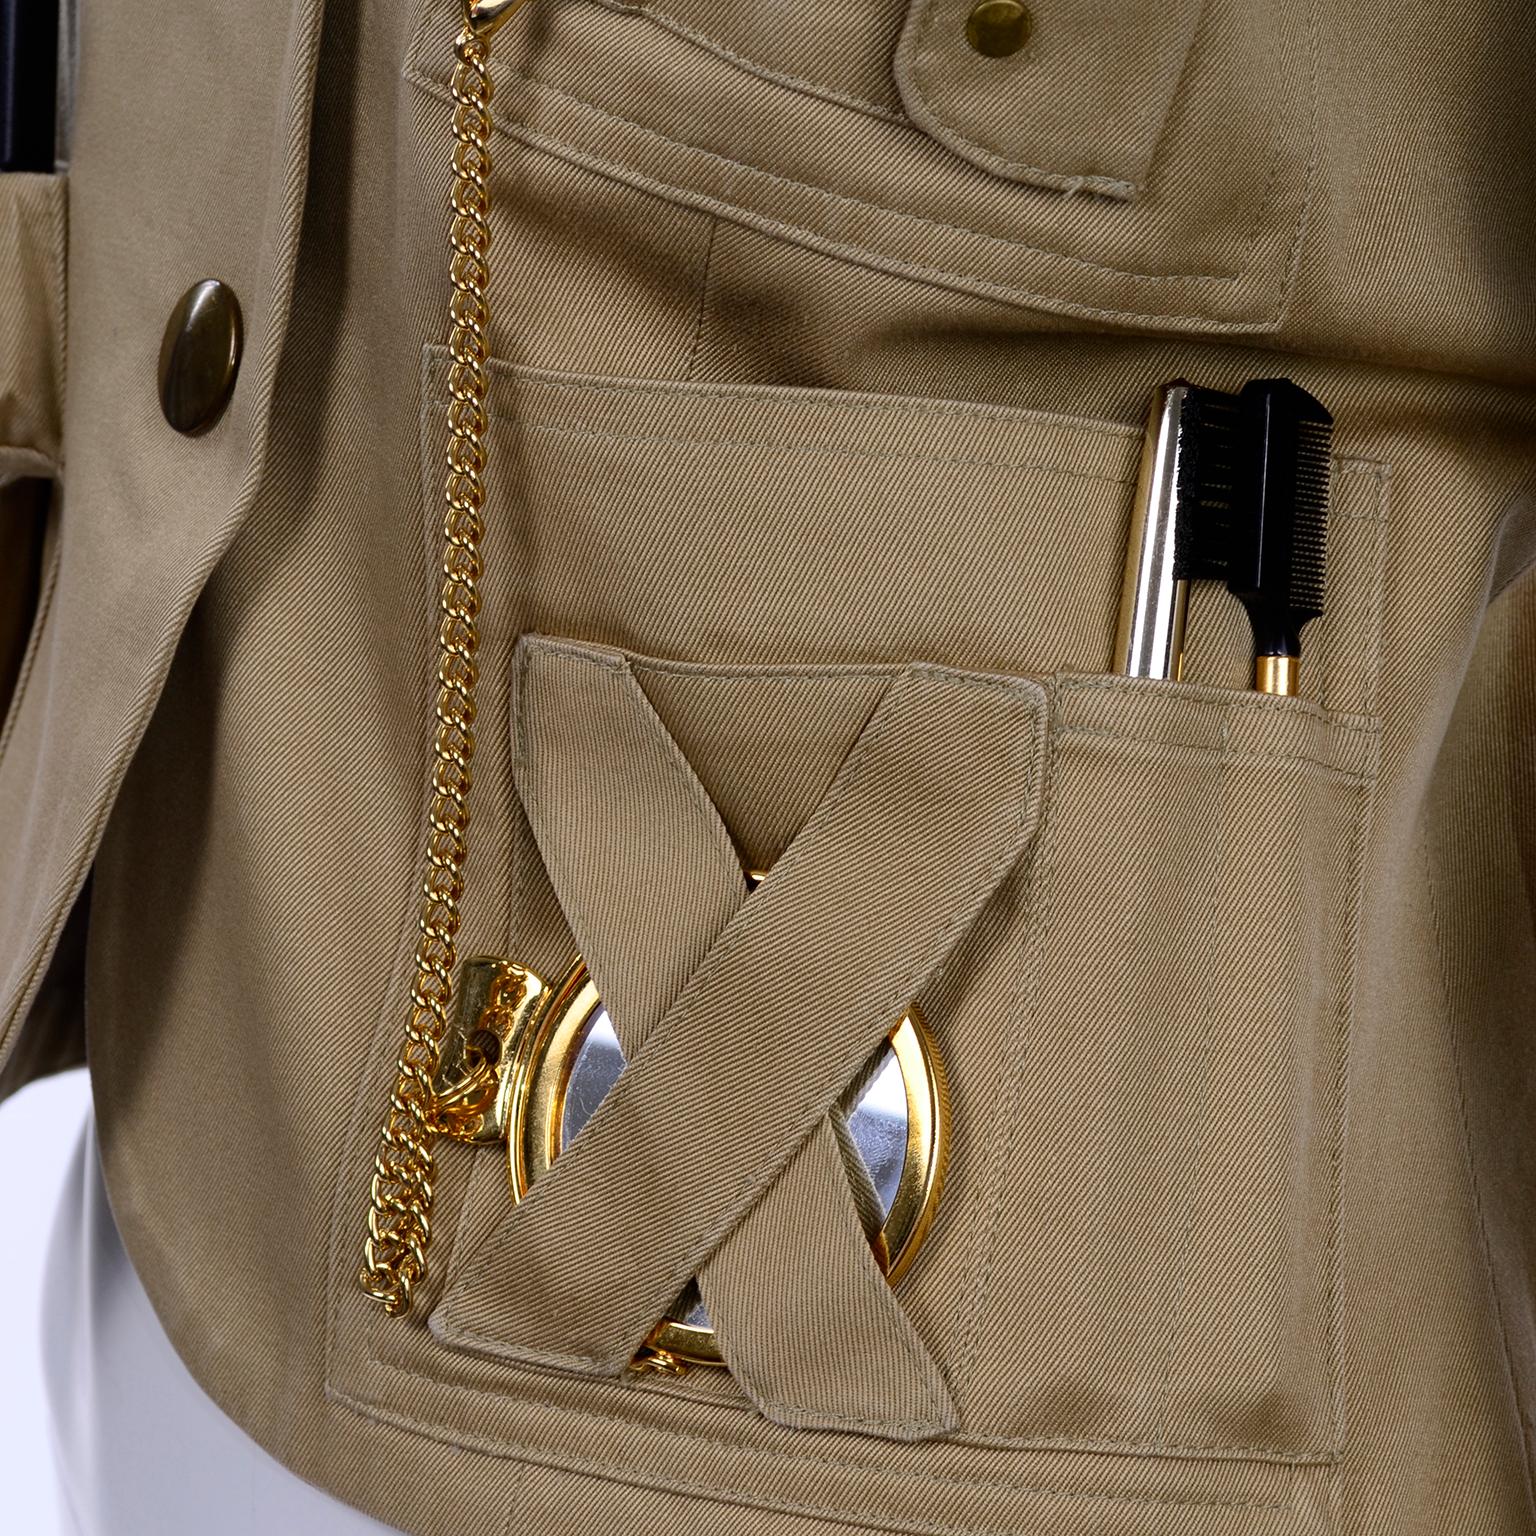 1991 Franco Moschino Couture Survival Jacket in Khaki Cotton Urban Jungle Tools 6